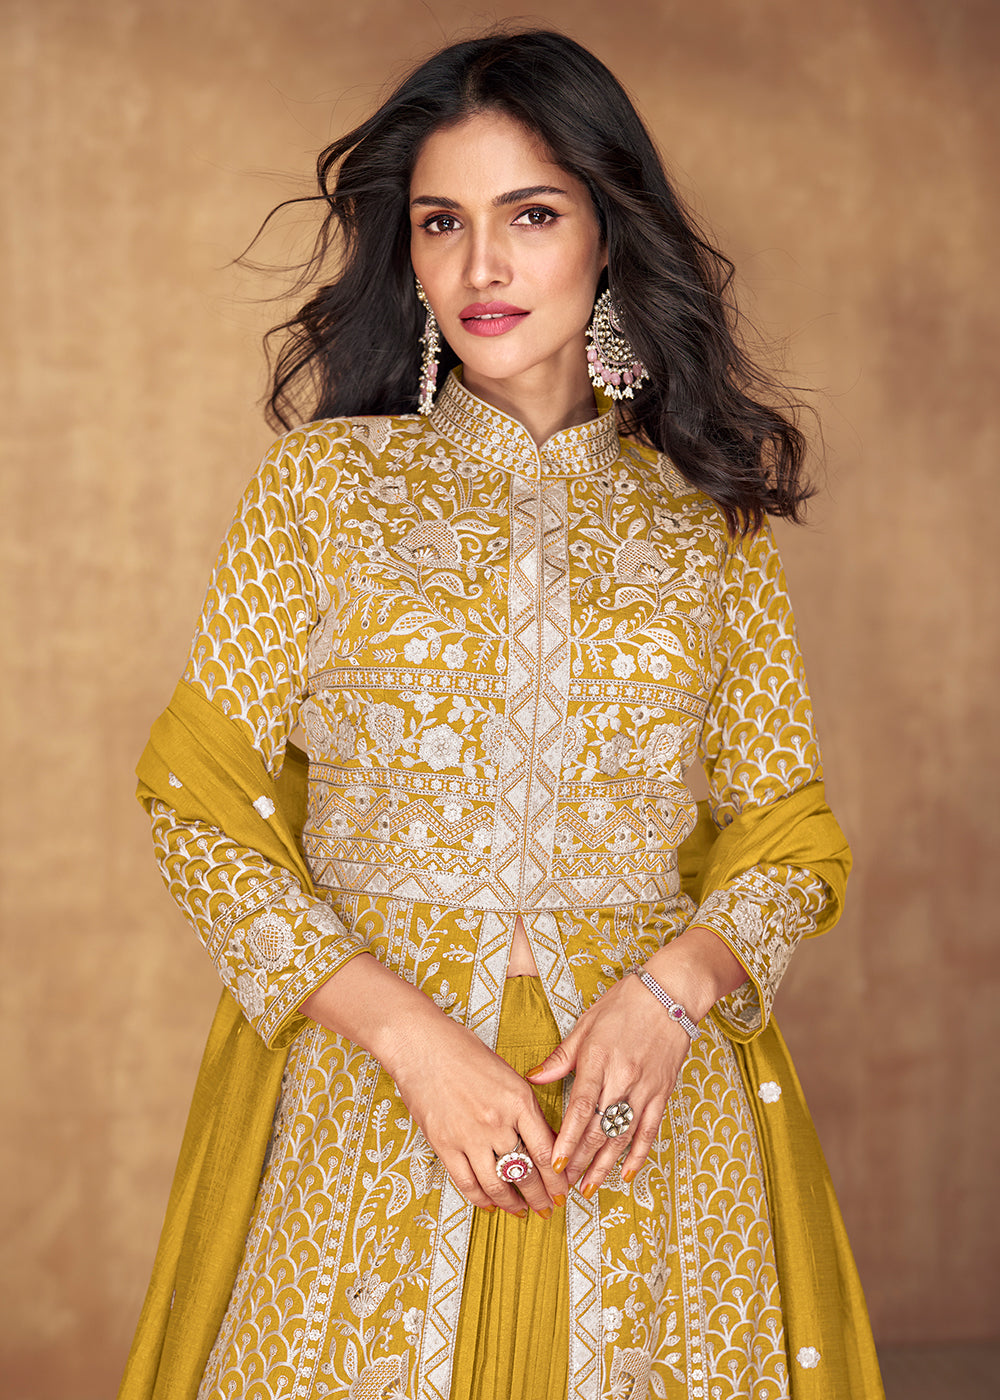 Buy Now Yellow Slit Style Embroidered Lehenga Anarkali Suit Online in USA, UK, Australia, New Zealand, Canada & Worldwide at Empress Clothing.